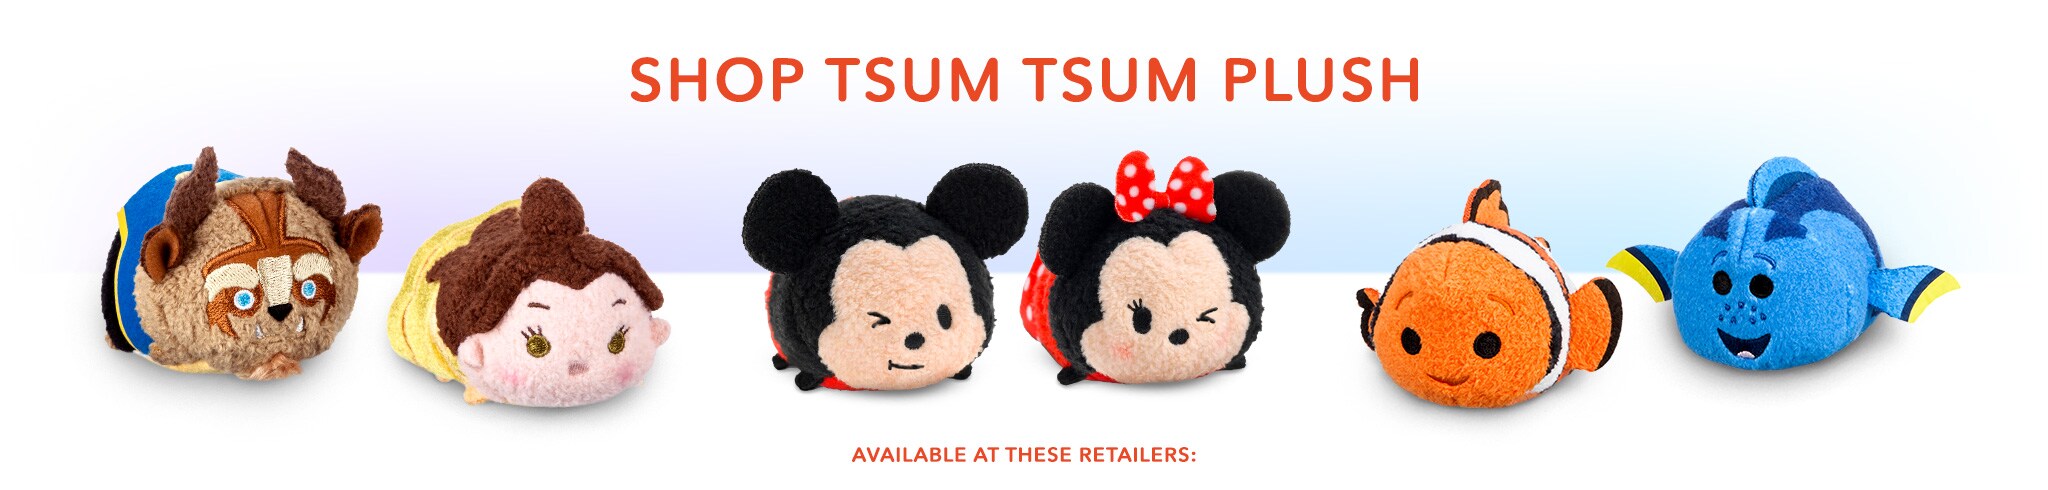 where can i buy tsum tsum plush